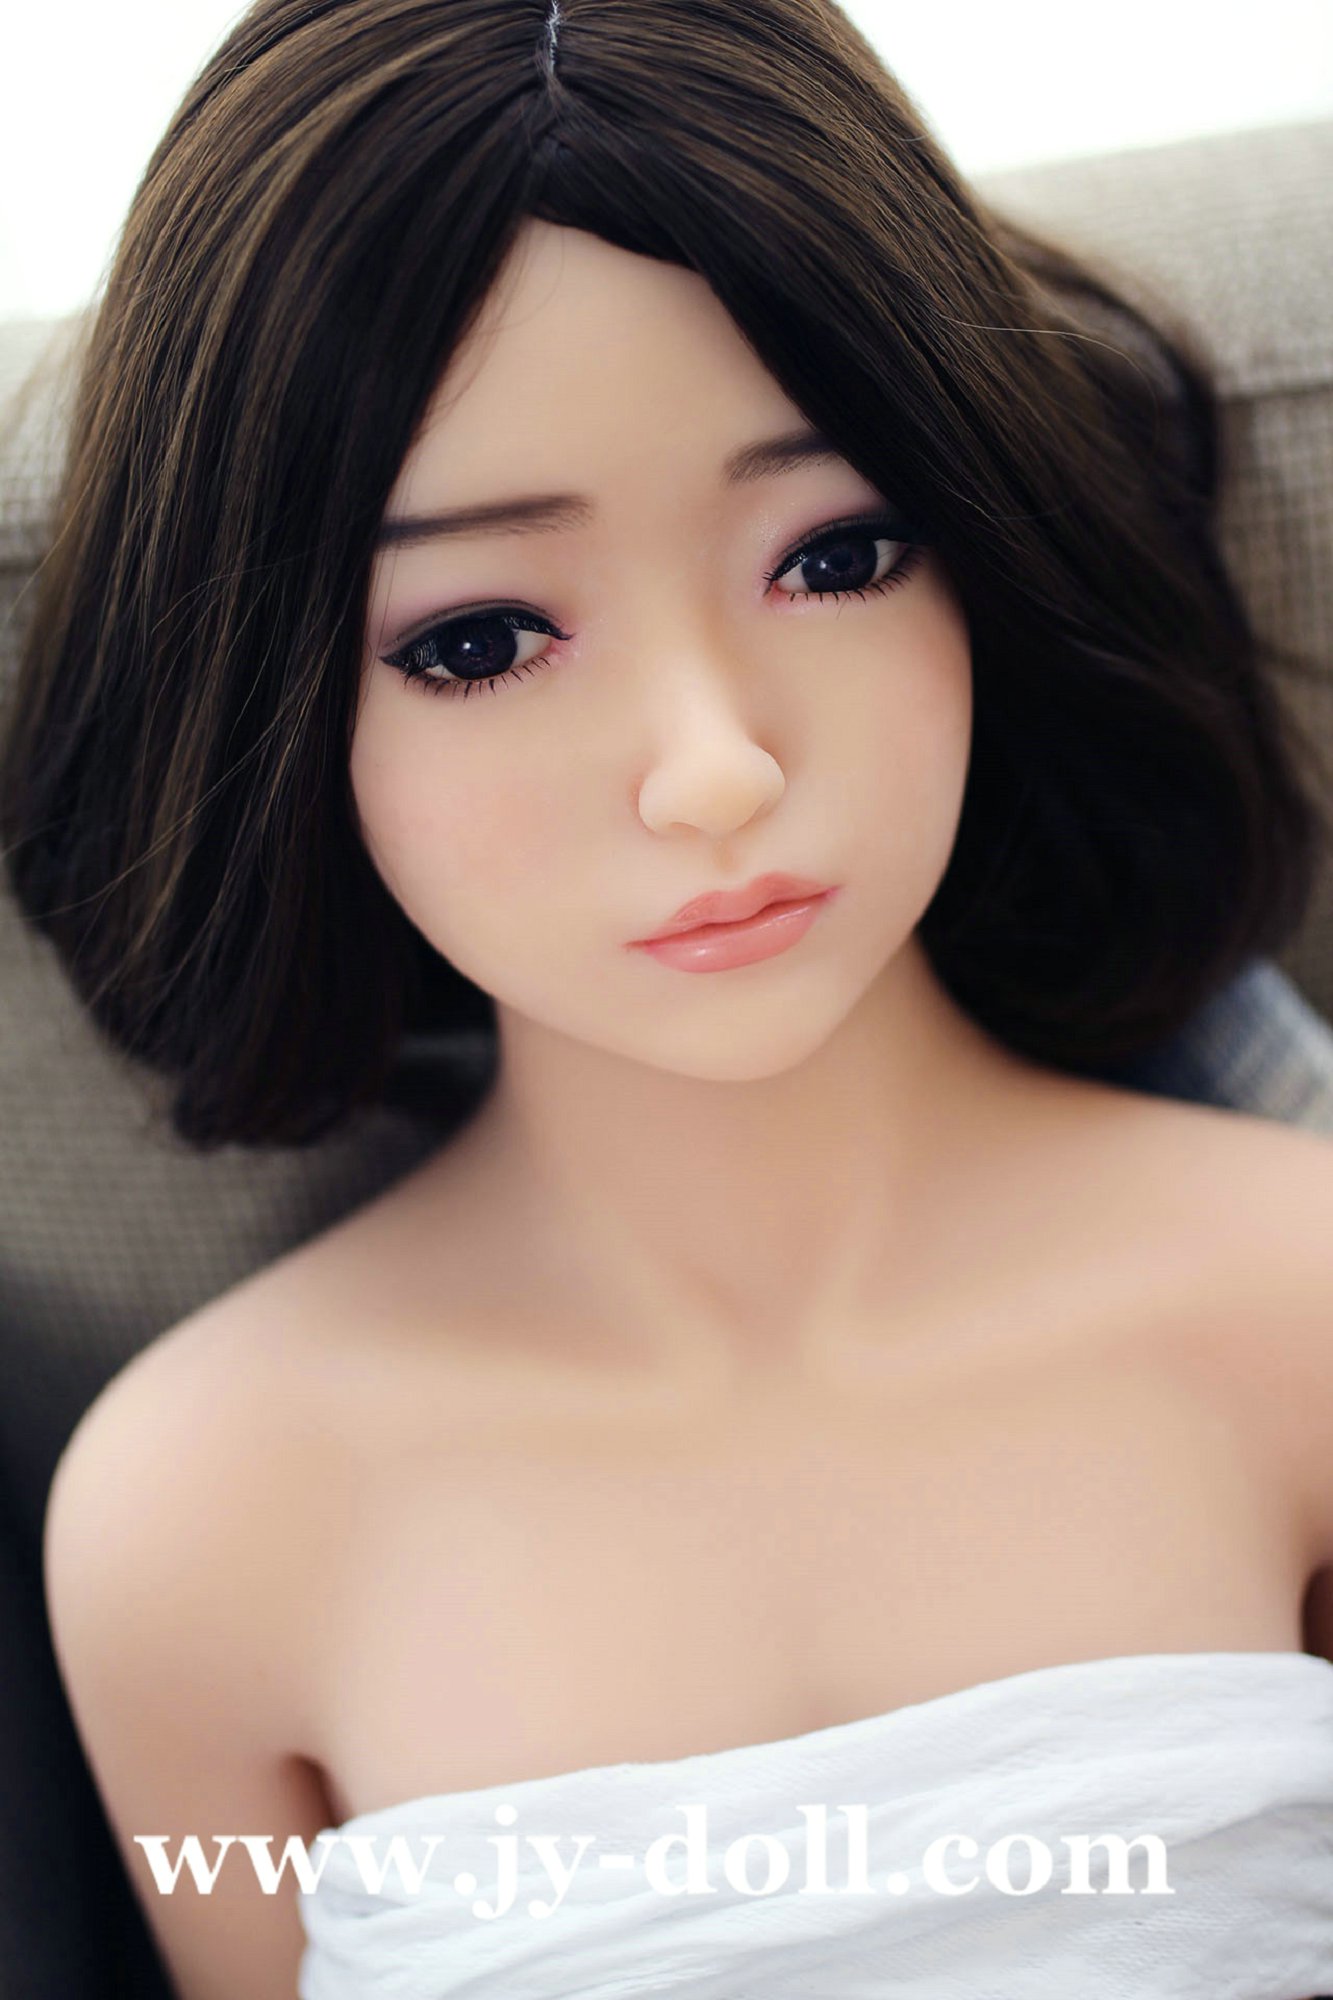 JY Doll 135cm Flat chest Doll Jojo